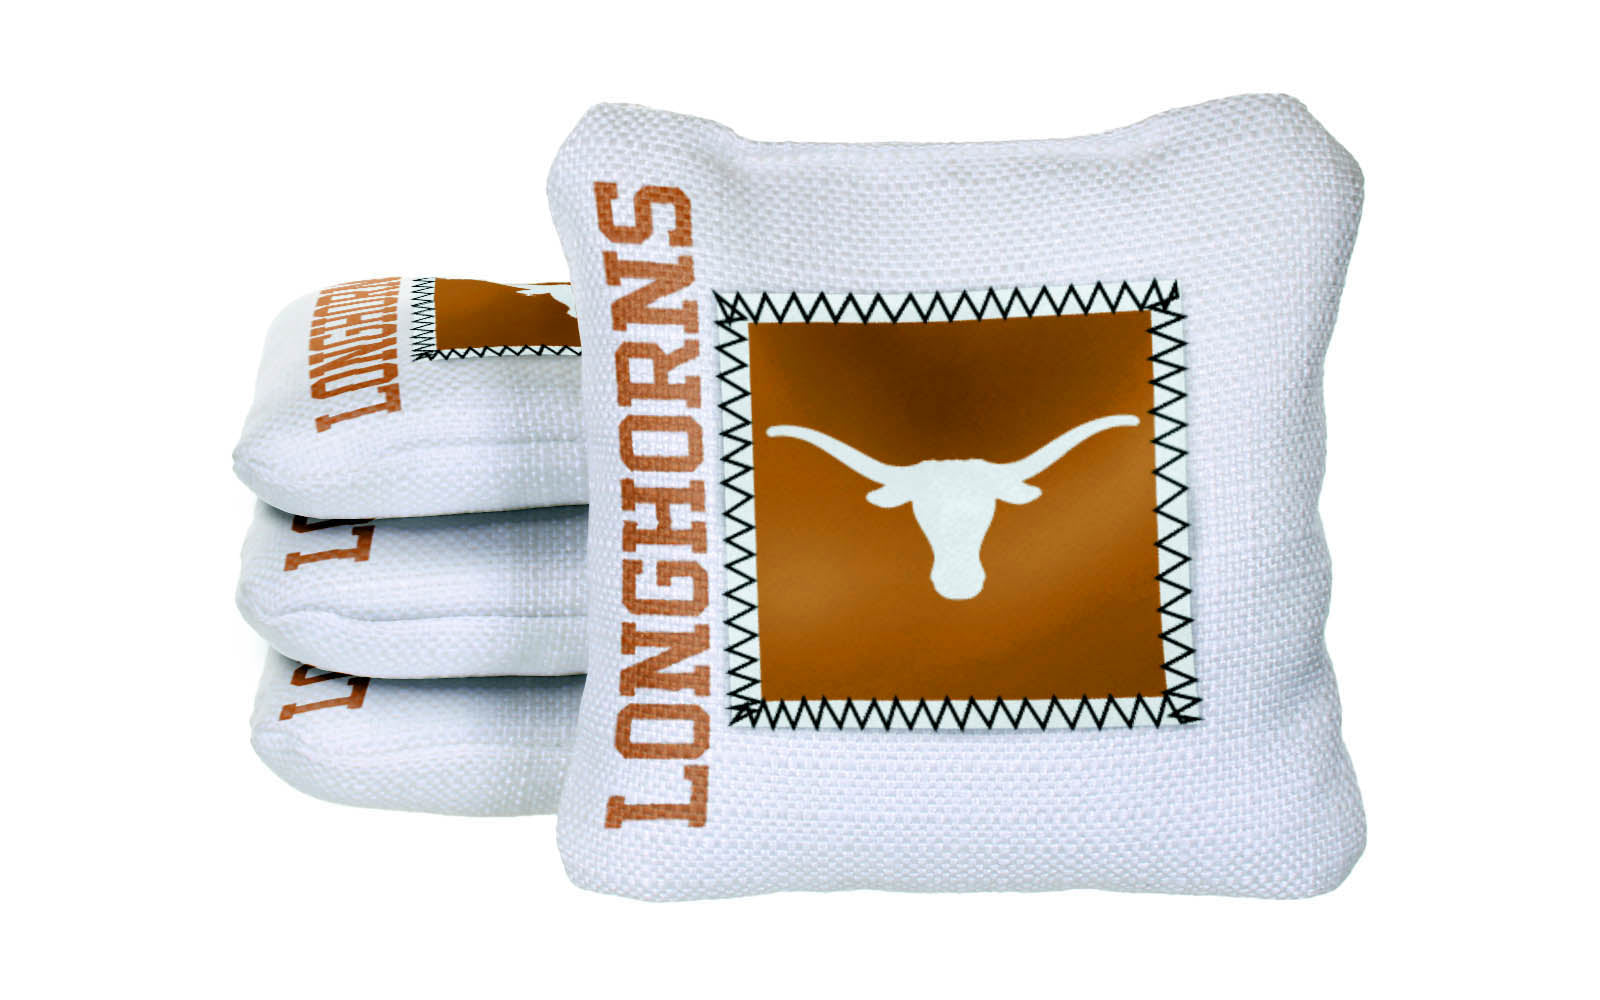 Officially Licensed Collegiate Cornhole Bags - Gamechanger - Set of 4 - University of Texas